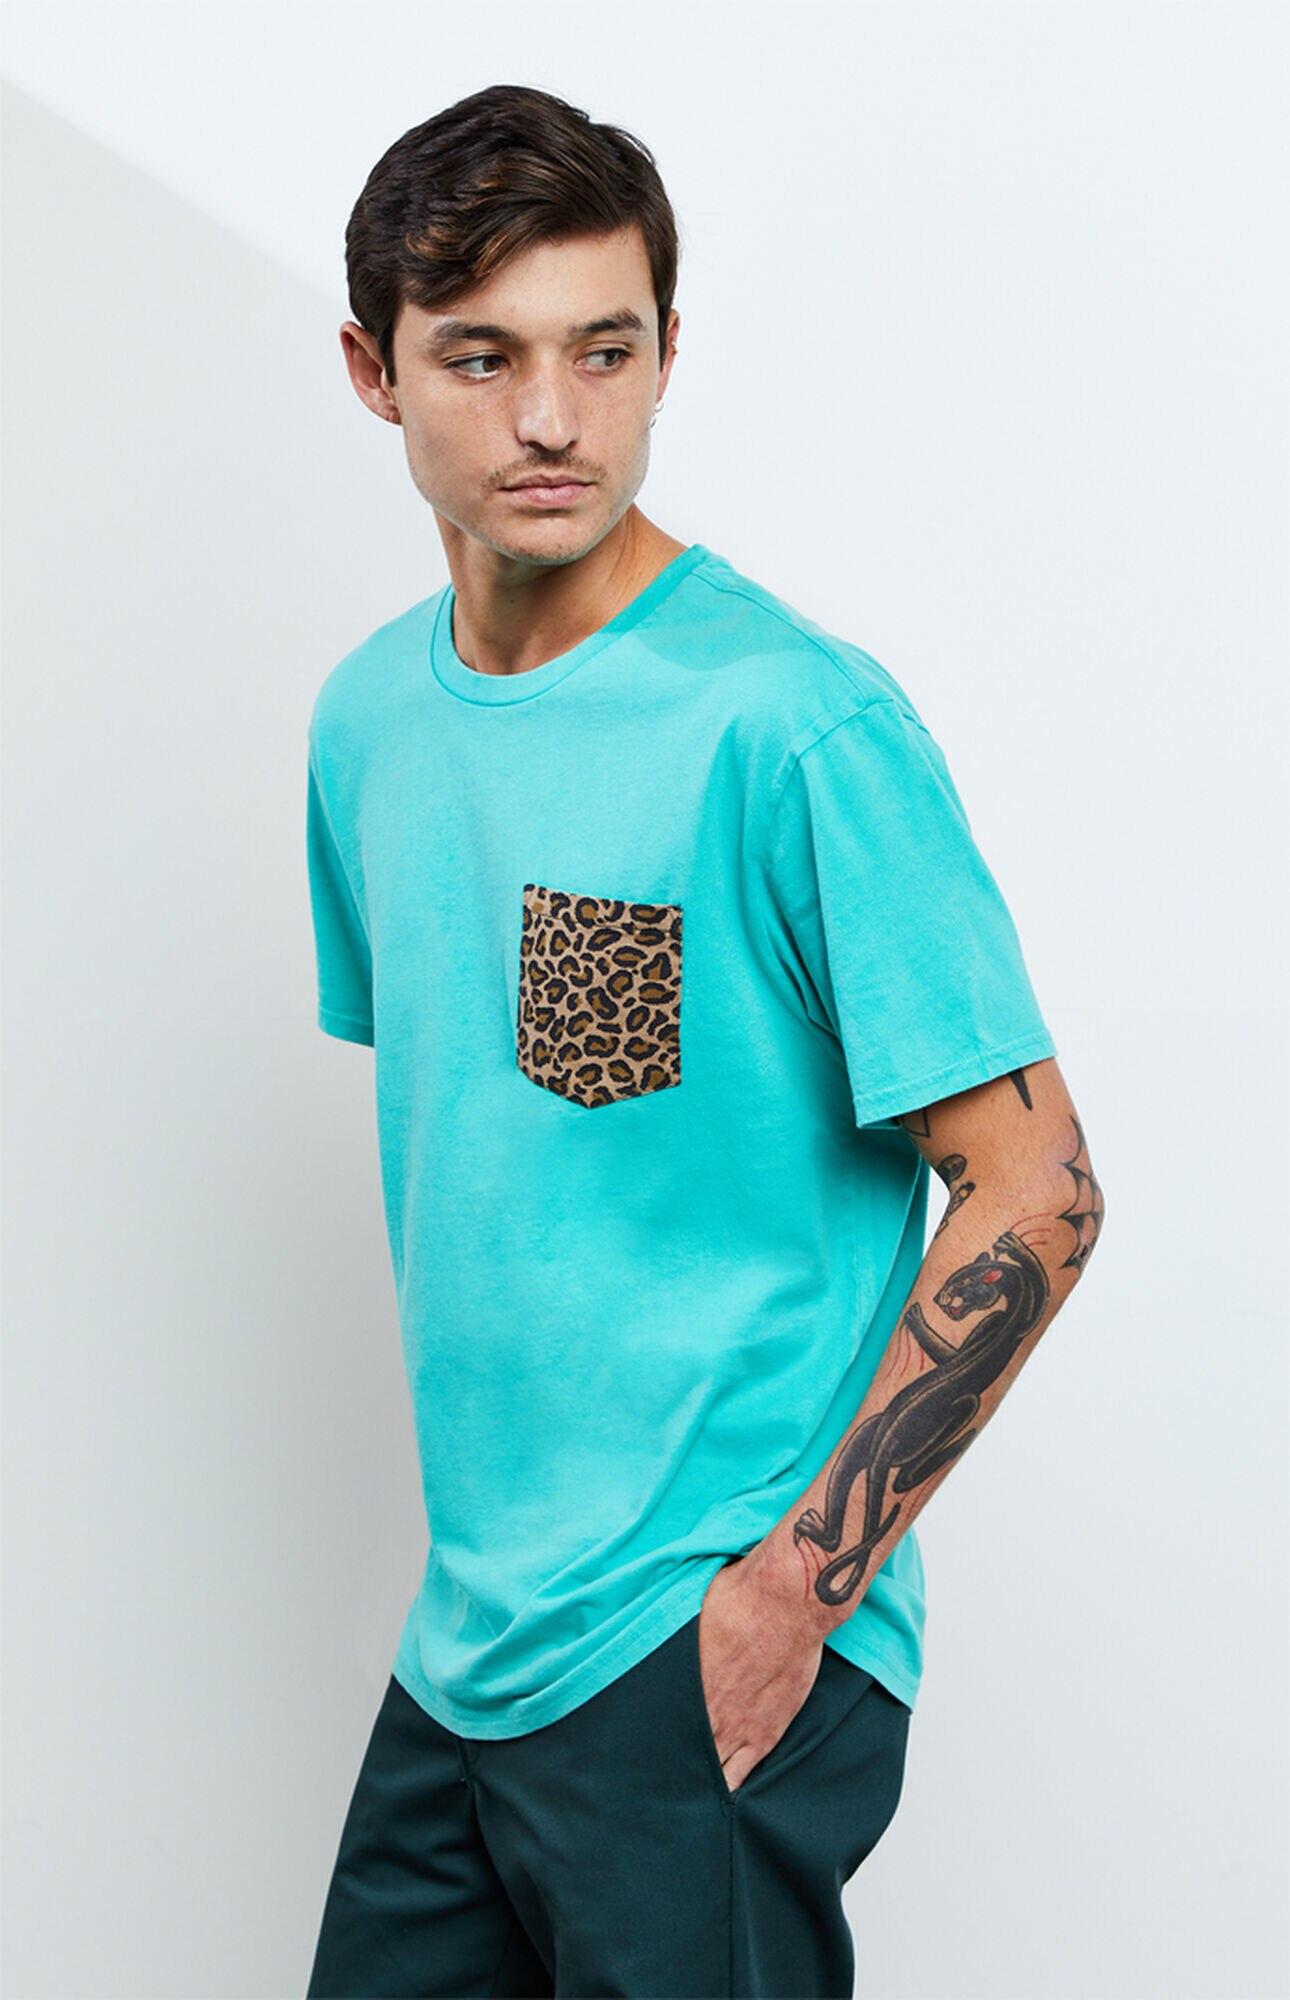 PacSun Cotton Pratt Leopard Pocket T-shirt in Blue for Men - Lyst